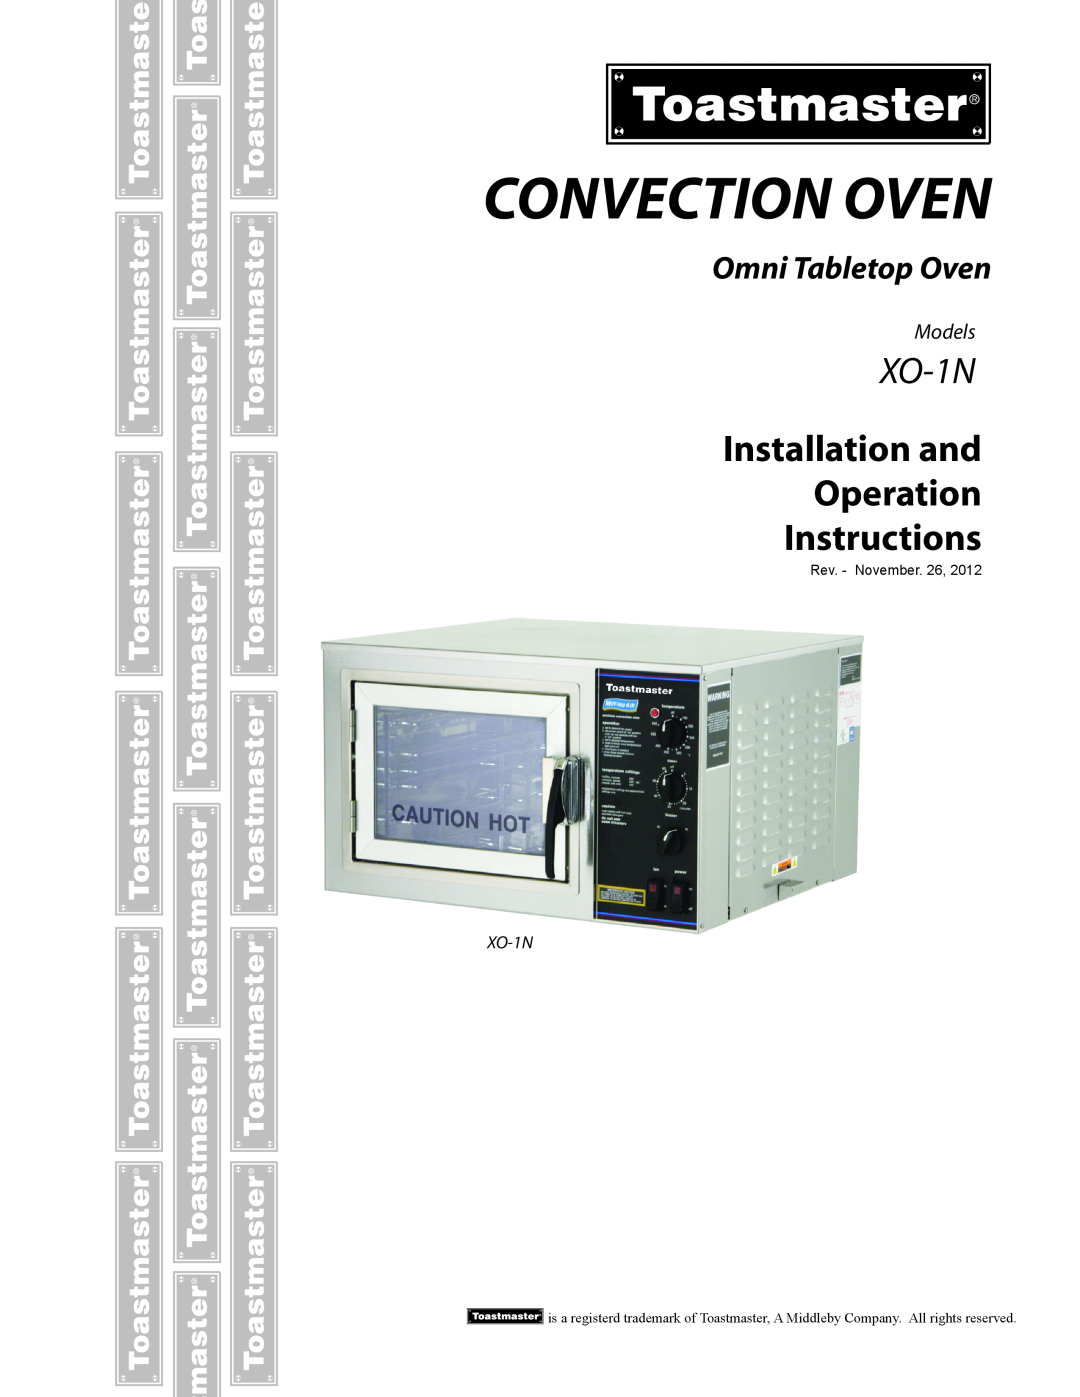 Toastmaster manual Omni Tabletop Oven, XO-1NConvection Oven Omni, Toastmaster XO-1NOmni Convection Tabletop Oven 